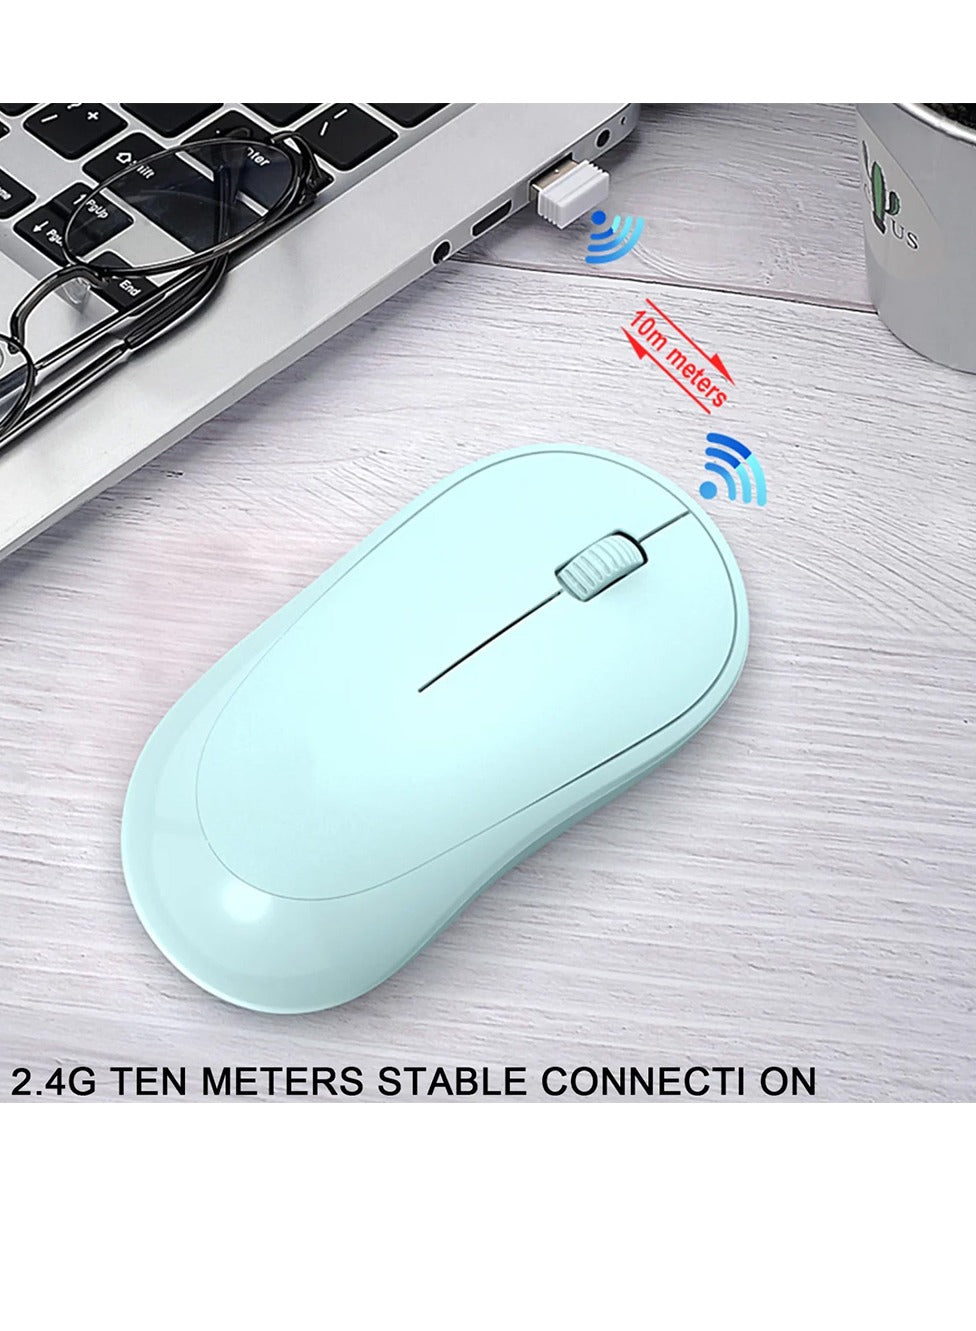 Forev FV-185 Wireless 2.4Ghz Office Mouse – Energy Saving Lightweight -10m Range | Pink